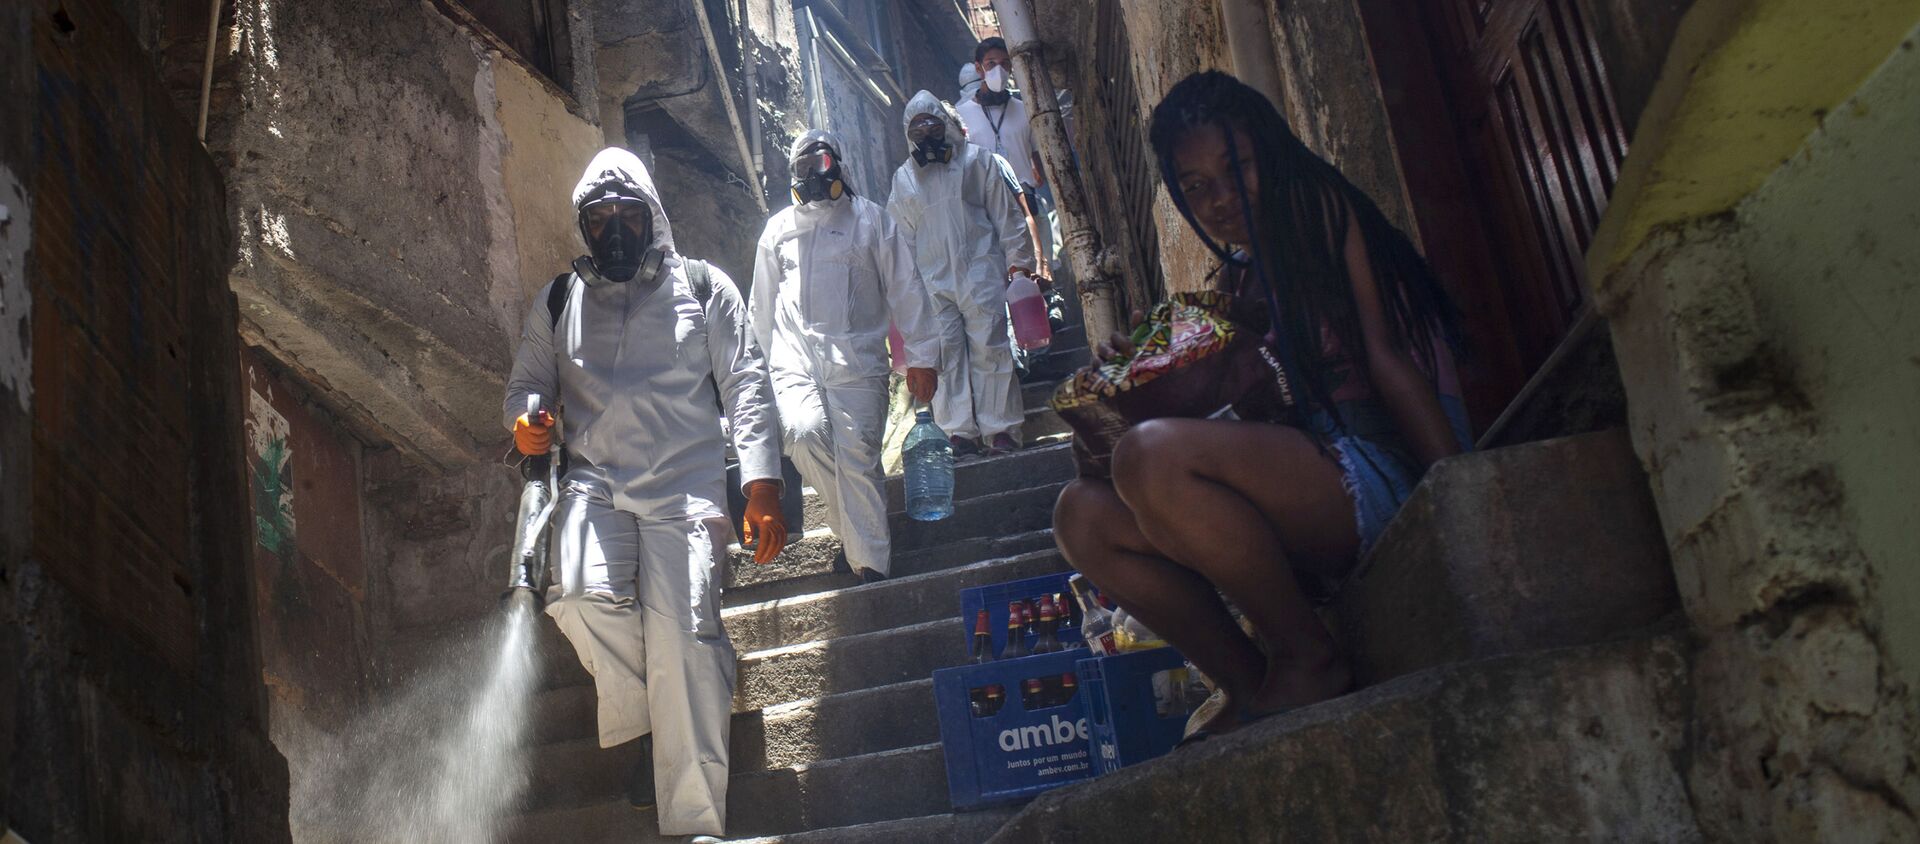 Volunteers spray disinfectant in an alley to help contain the spread of the new coronavirus, at the Santa Marta slum in Rio de Janeiro, Brazil, Saturday, Nov. 28, 2020.  - Sputnik International, 1920, 29.01.2021